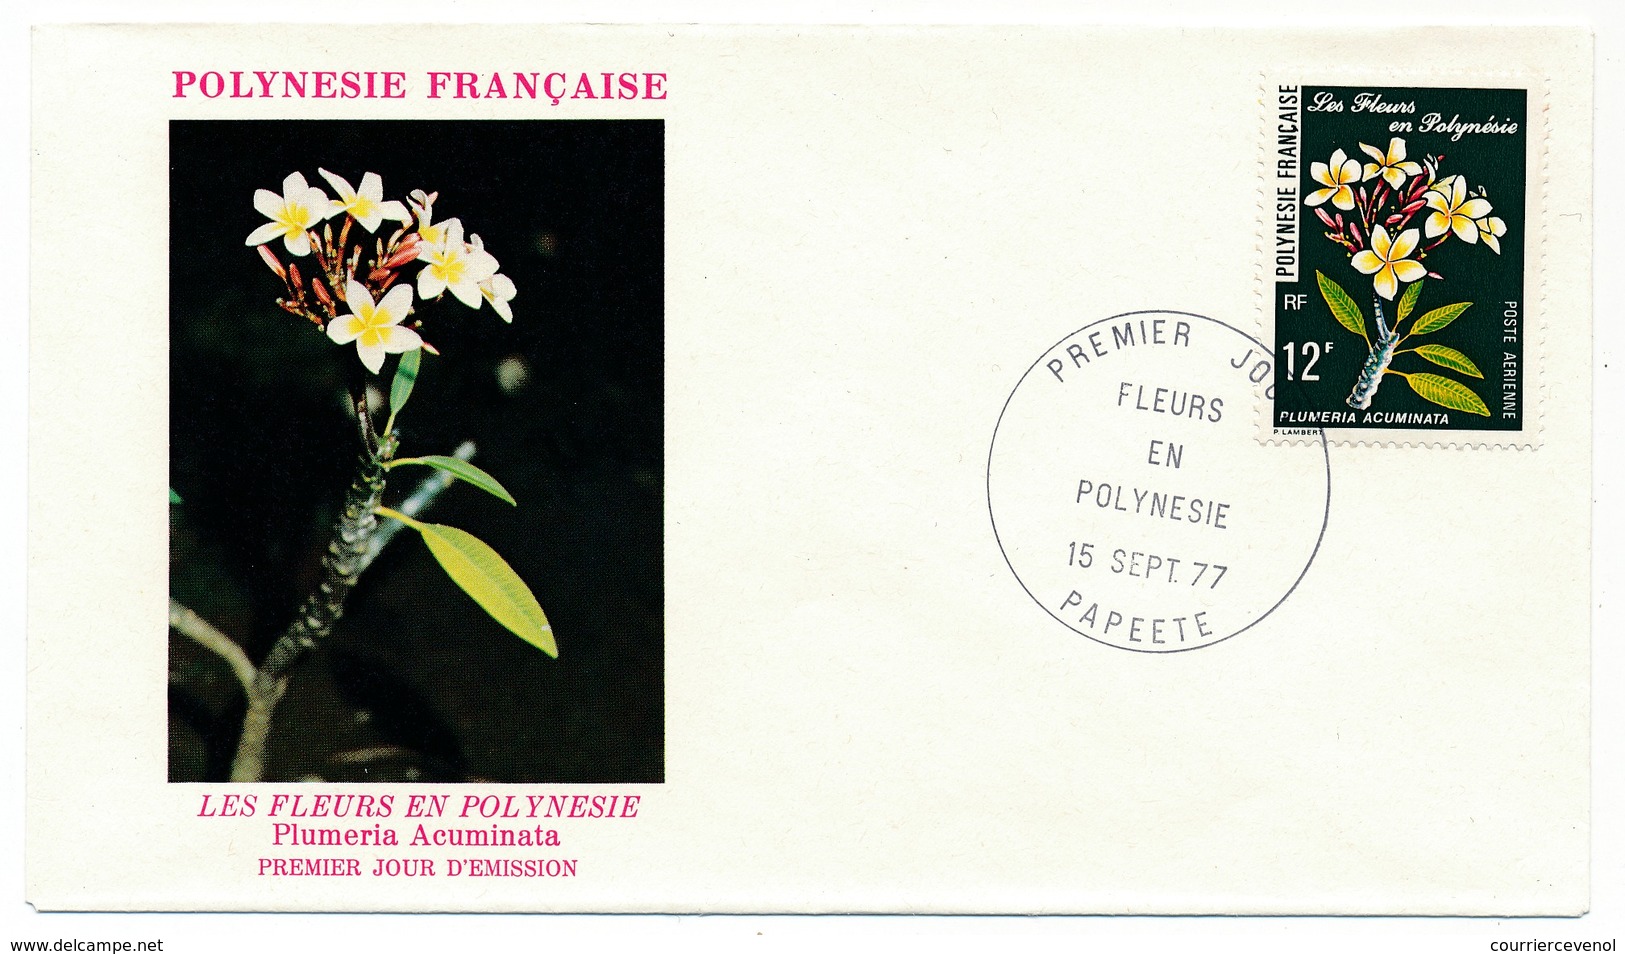 POLYNESIE FRANCAISE - FDC - Fleurs En Polynésie - Papeete - Septembre 1977 - FDC